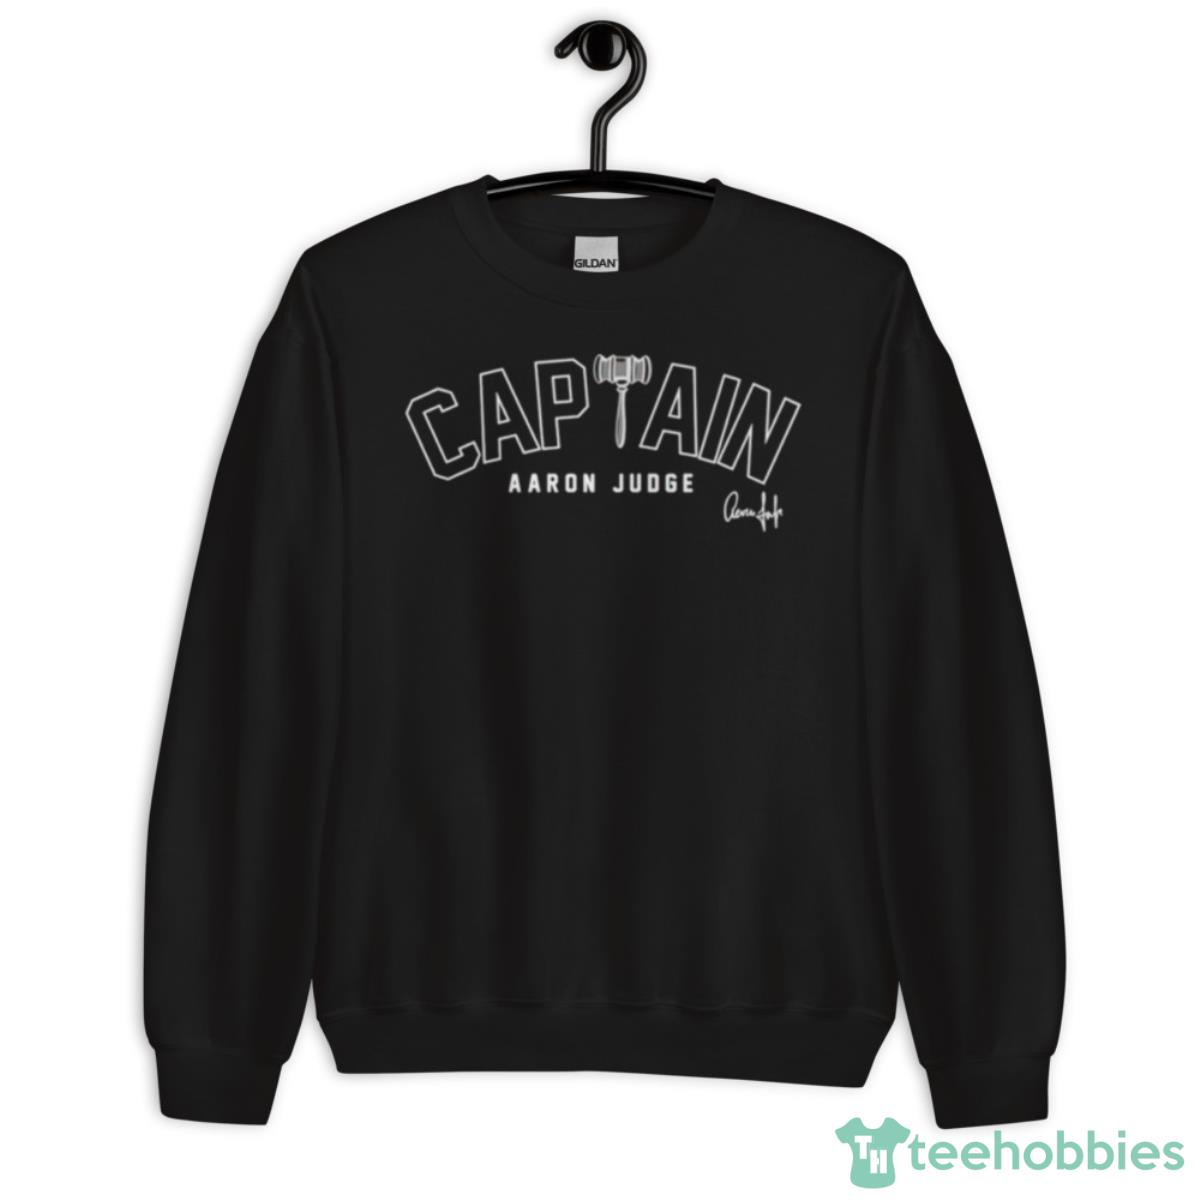 Captain Aaron Judge Signature Shirt - Unisex Crewneck Sweatshirt